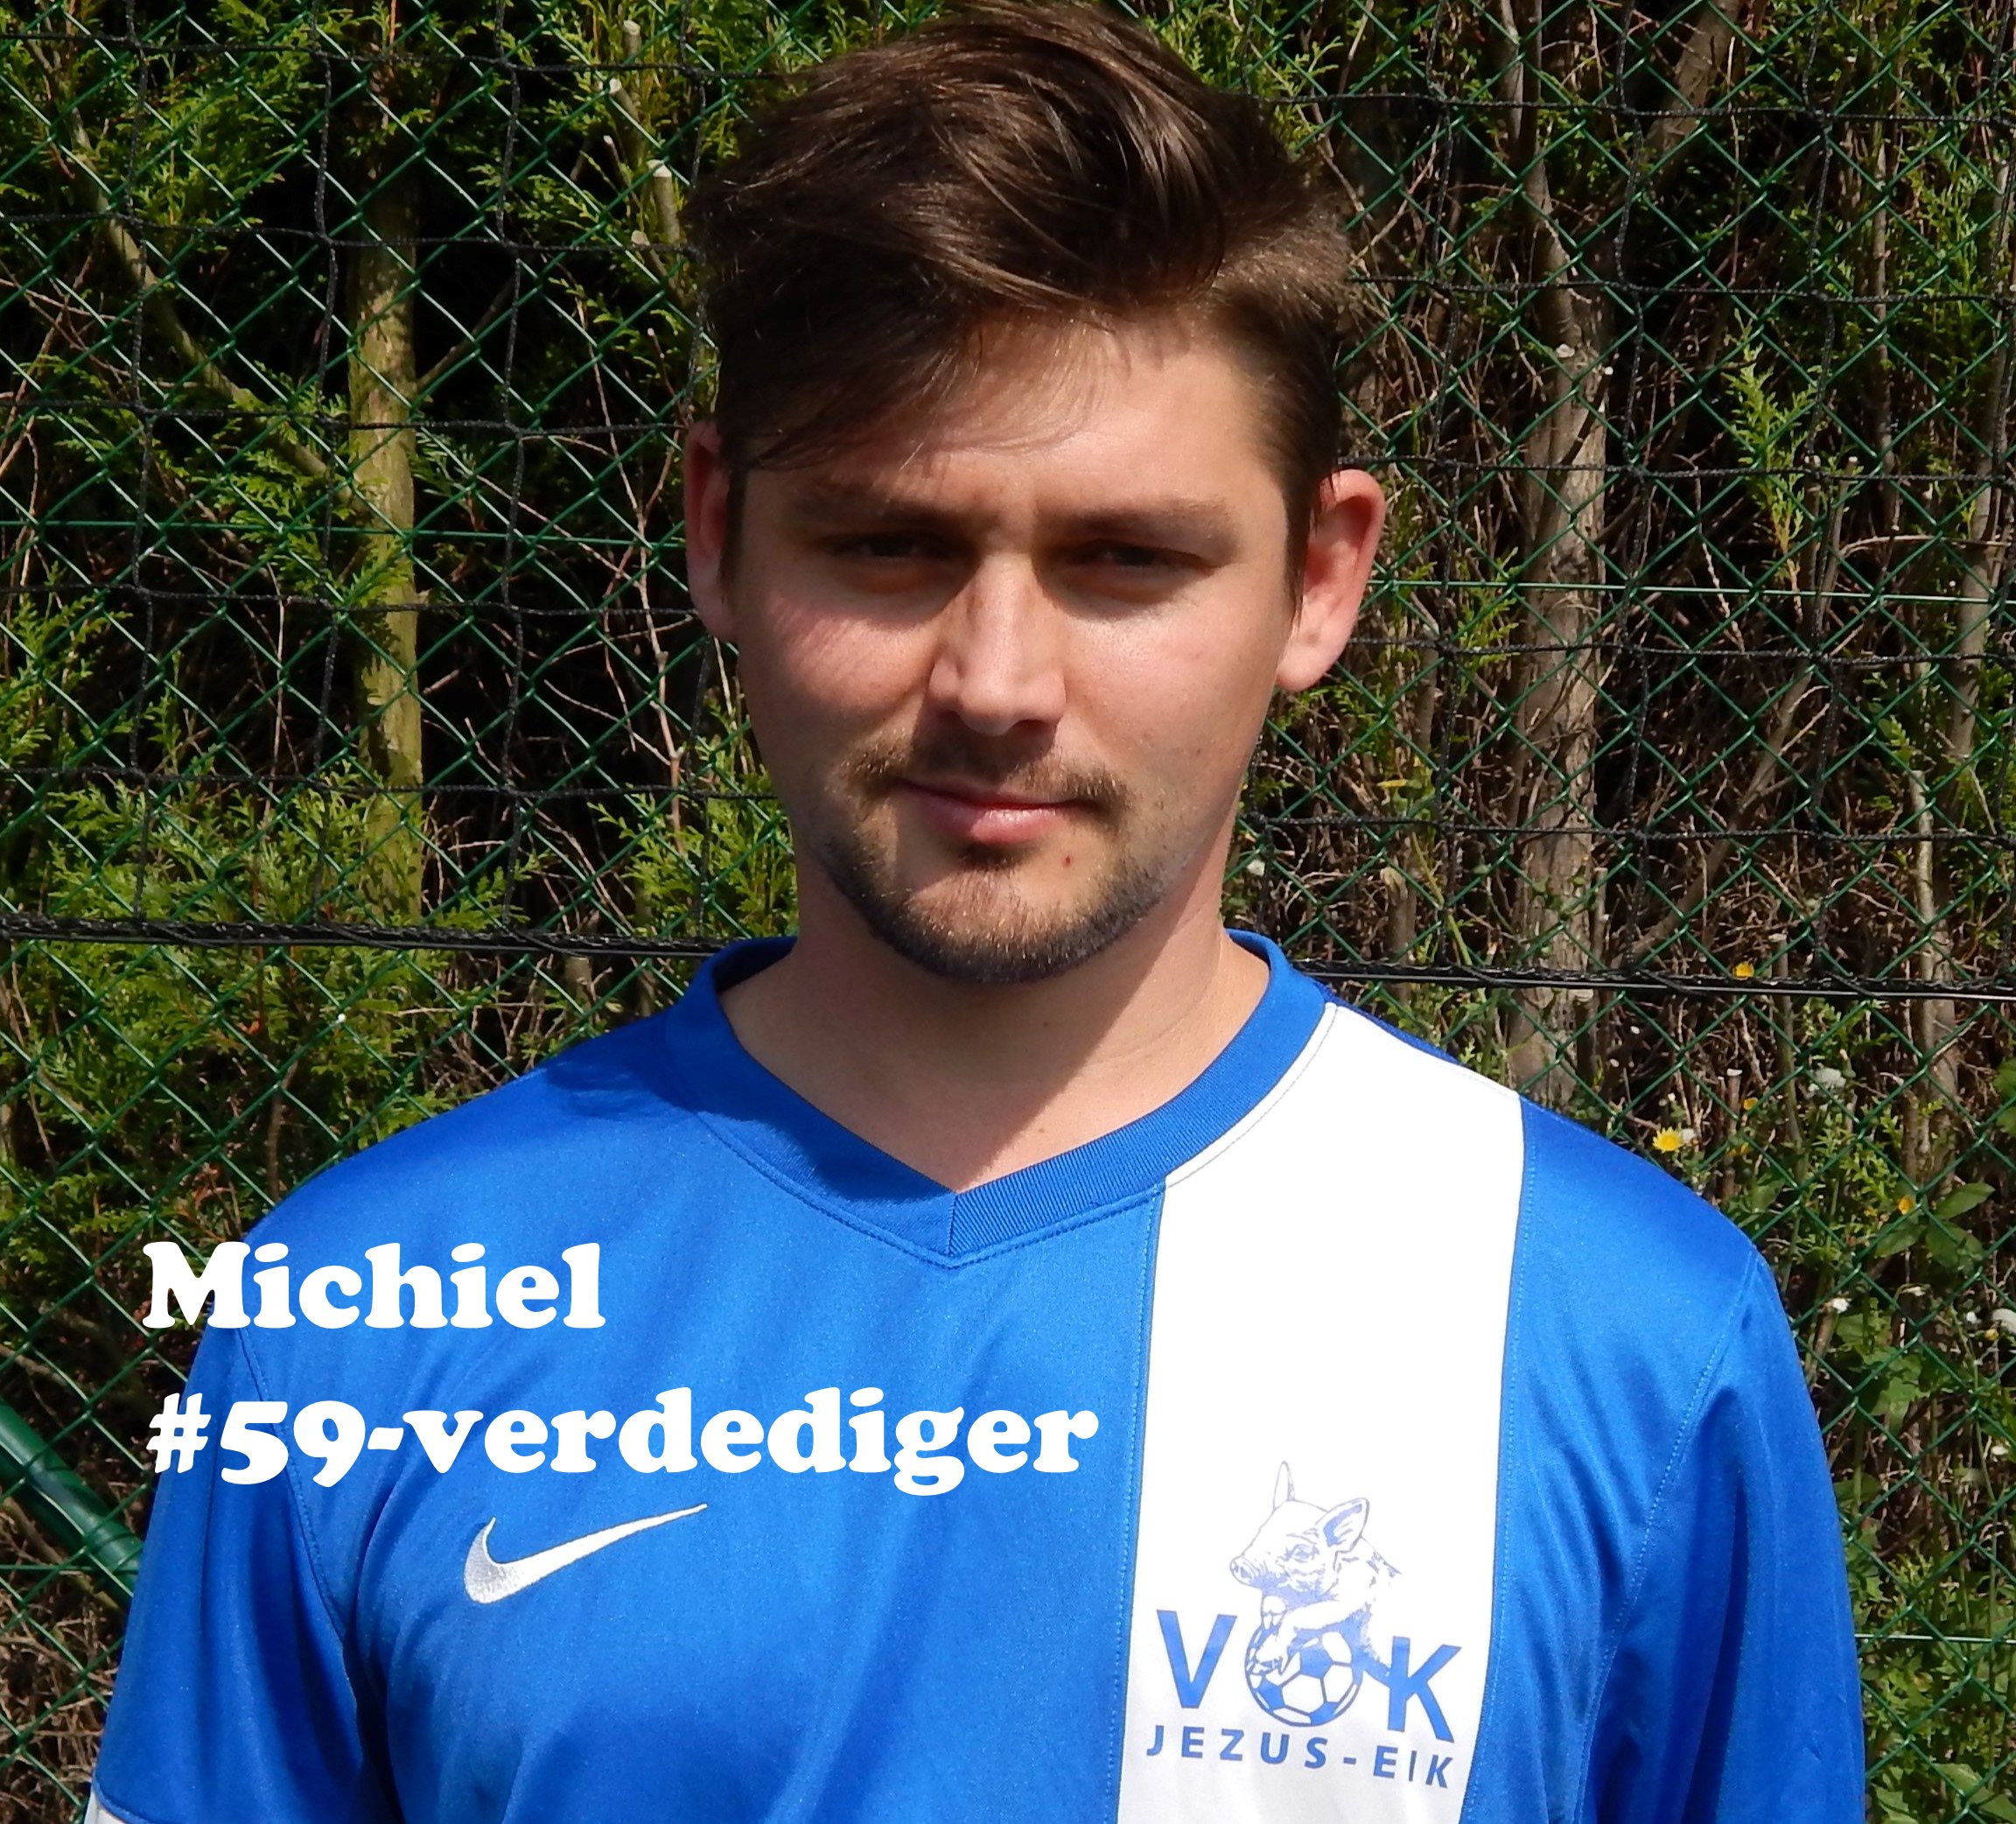 Michiel - Verdediger - 59